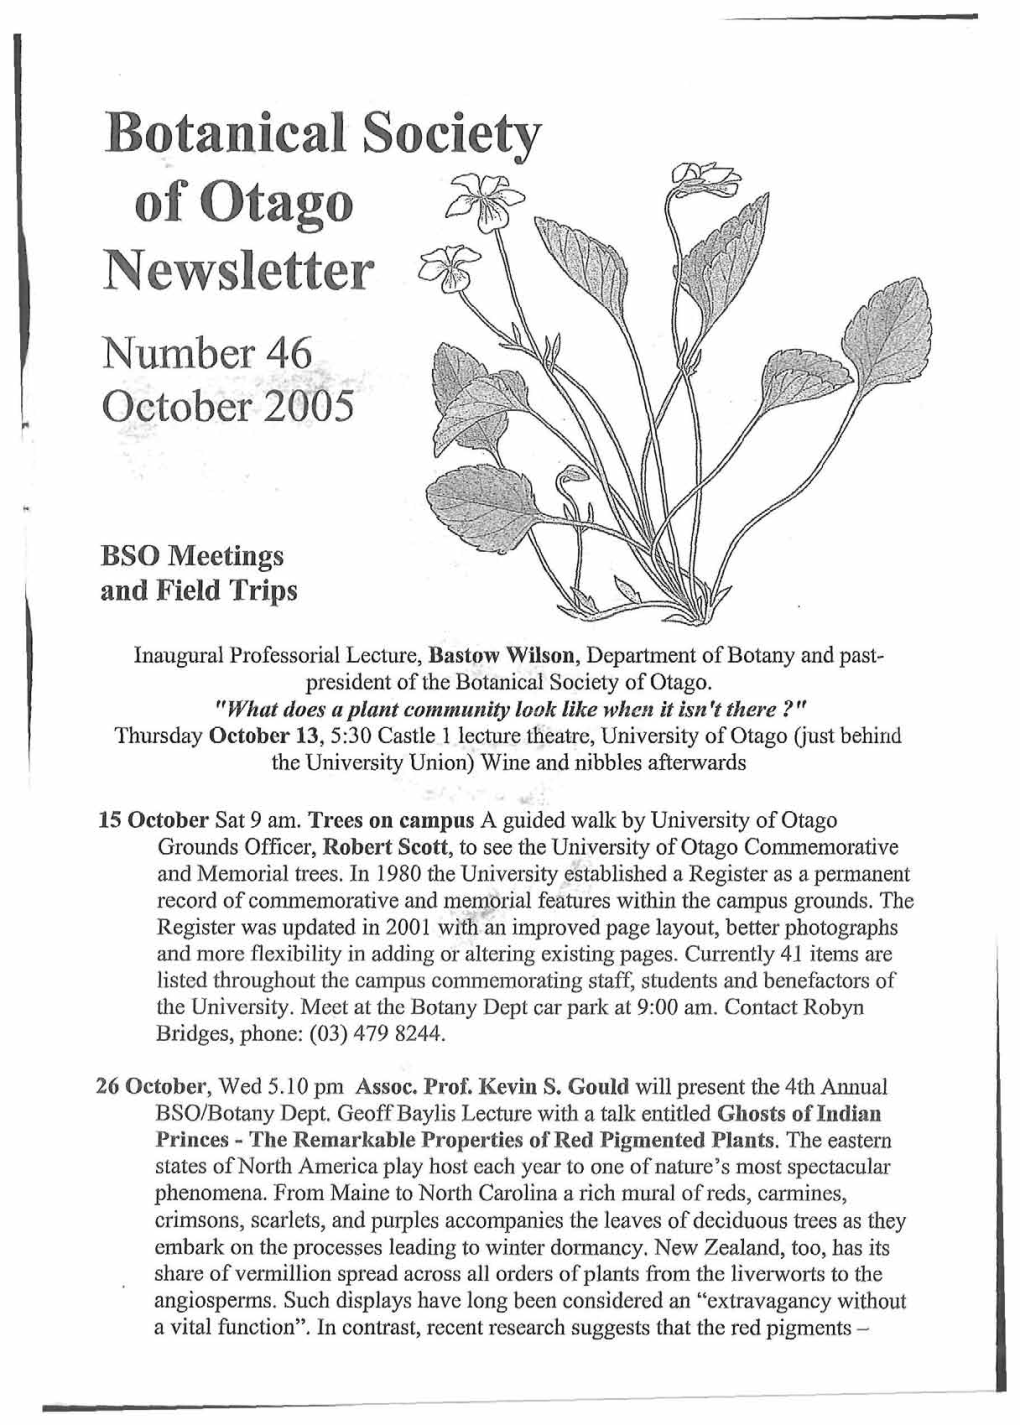 Botanical Society of Otago Newsletter Number 46 October 2005